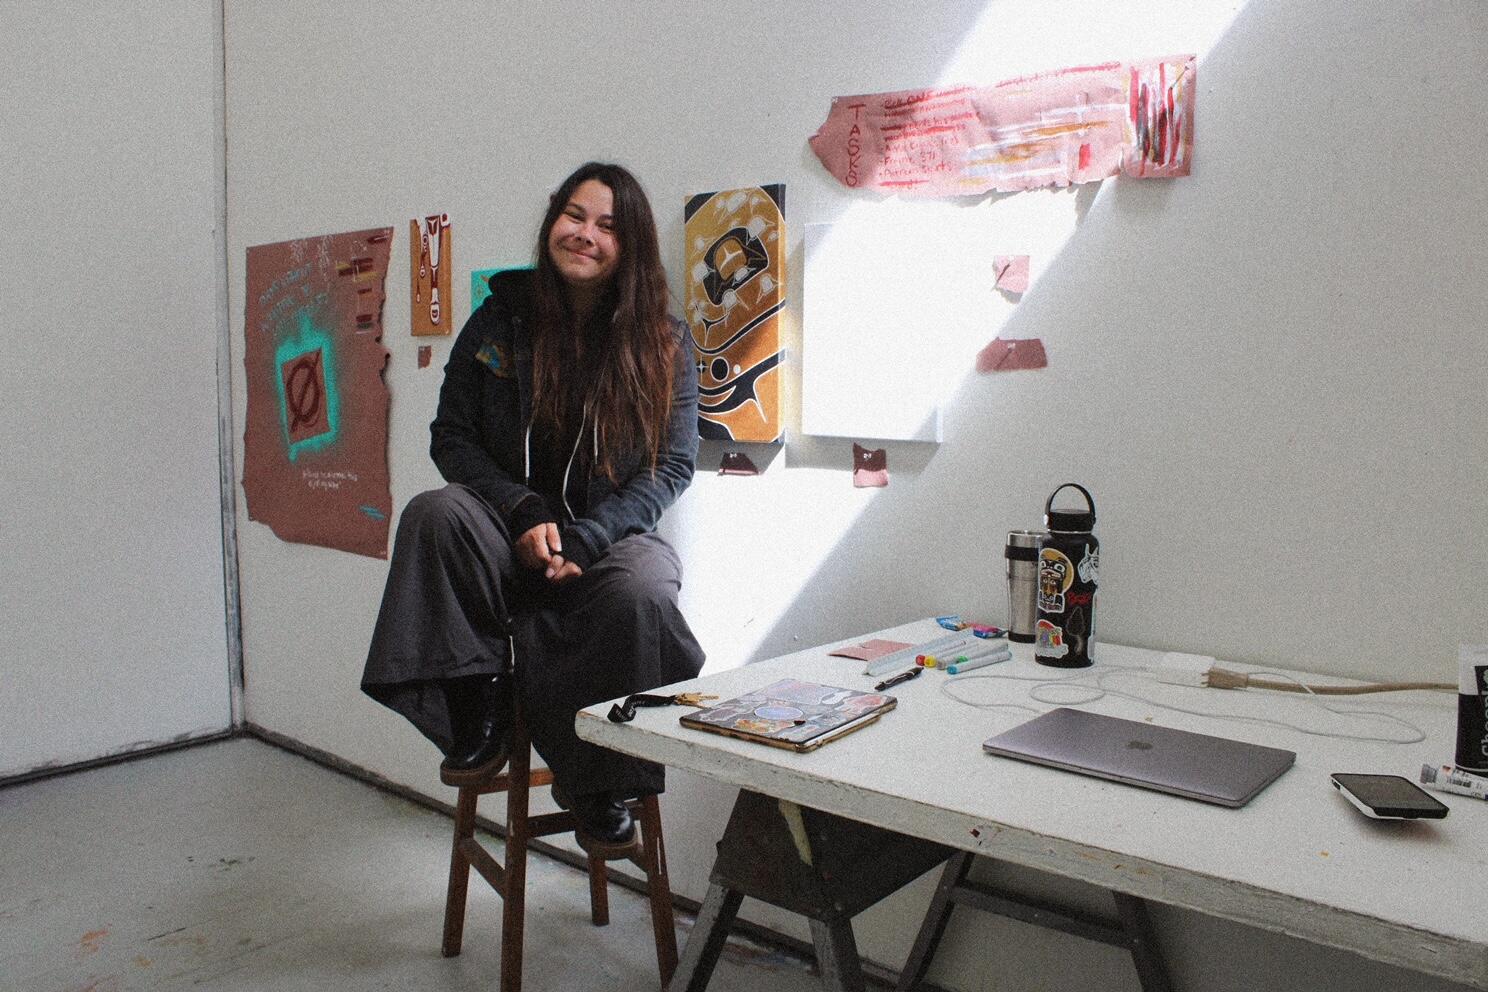 Woman sitting in art studio smiling